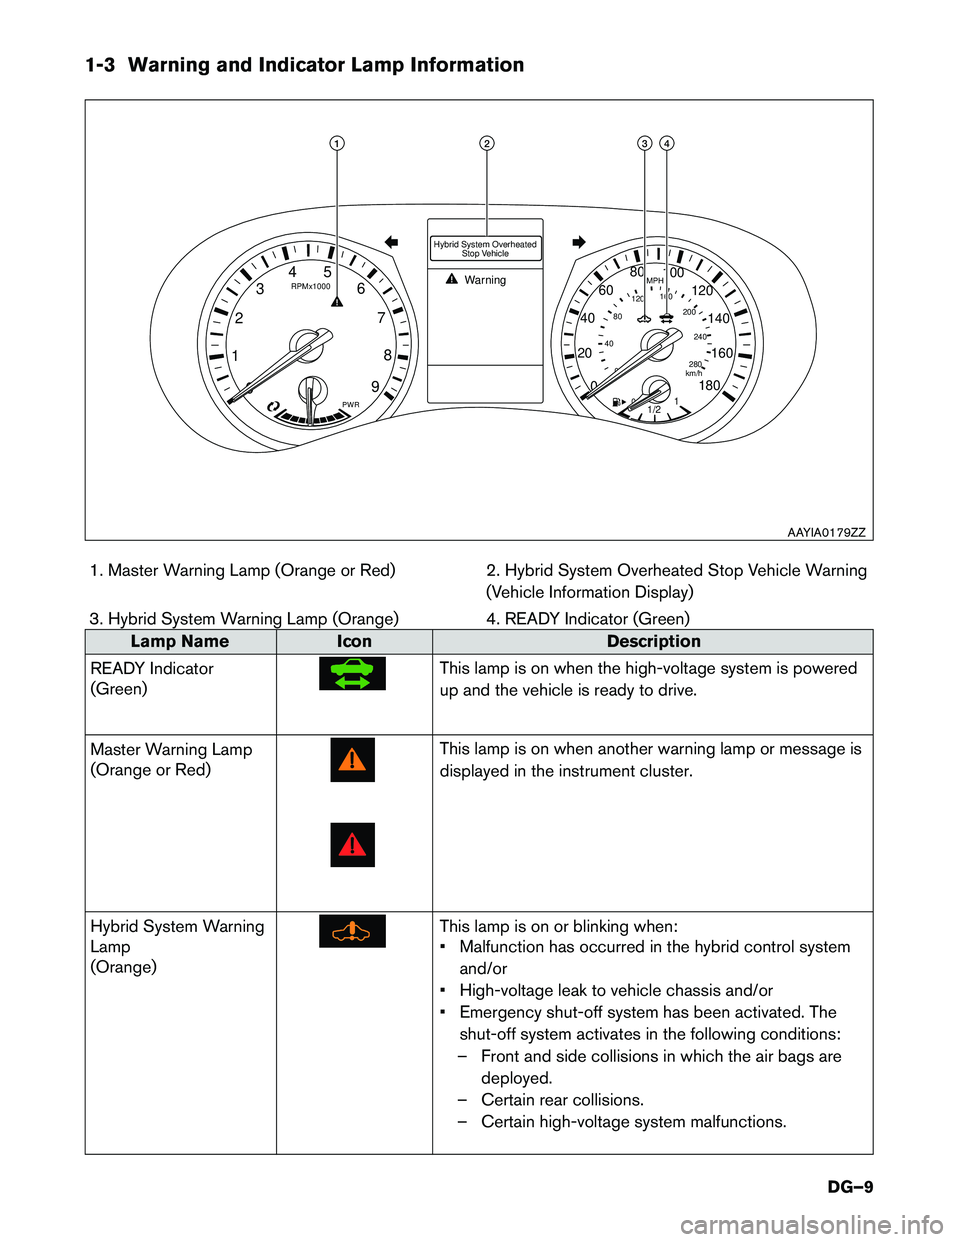 INFINITI Q50 HYBRID 2016  Dismantling Guide 1-3 Warning and Indicator Lamp Information
1. Master Warning Lamp (Orange or Red) 2. Hybrid System Overheated Stop Vehicle Warning
(Vehicle Information Display)
3. Hybrid System Warning Lamp (Orange) 